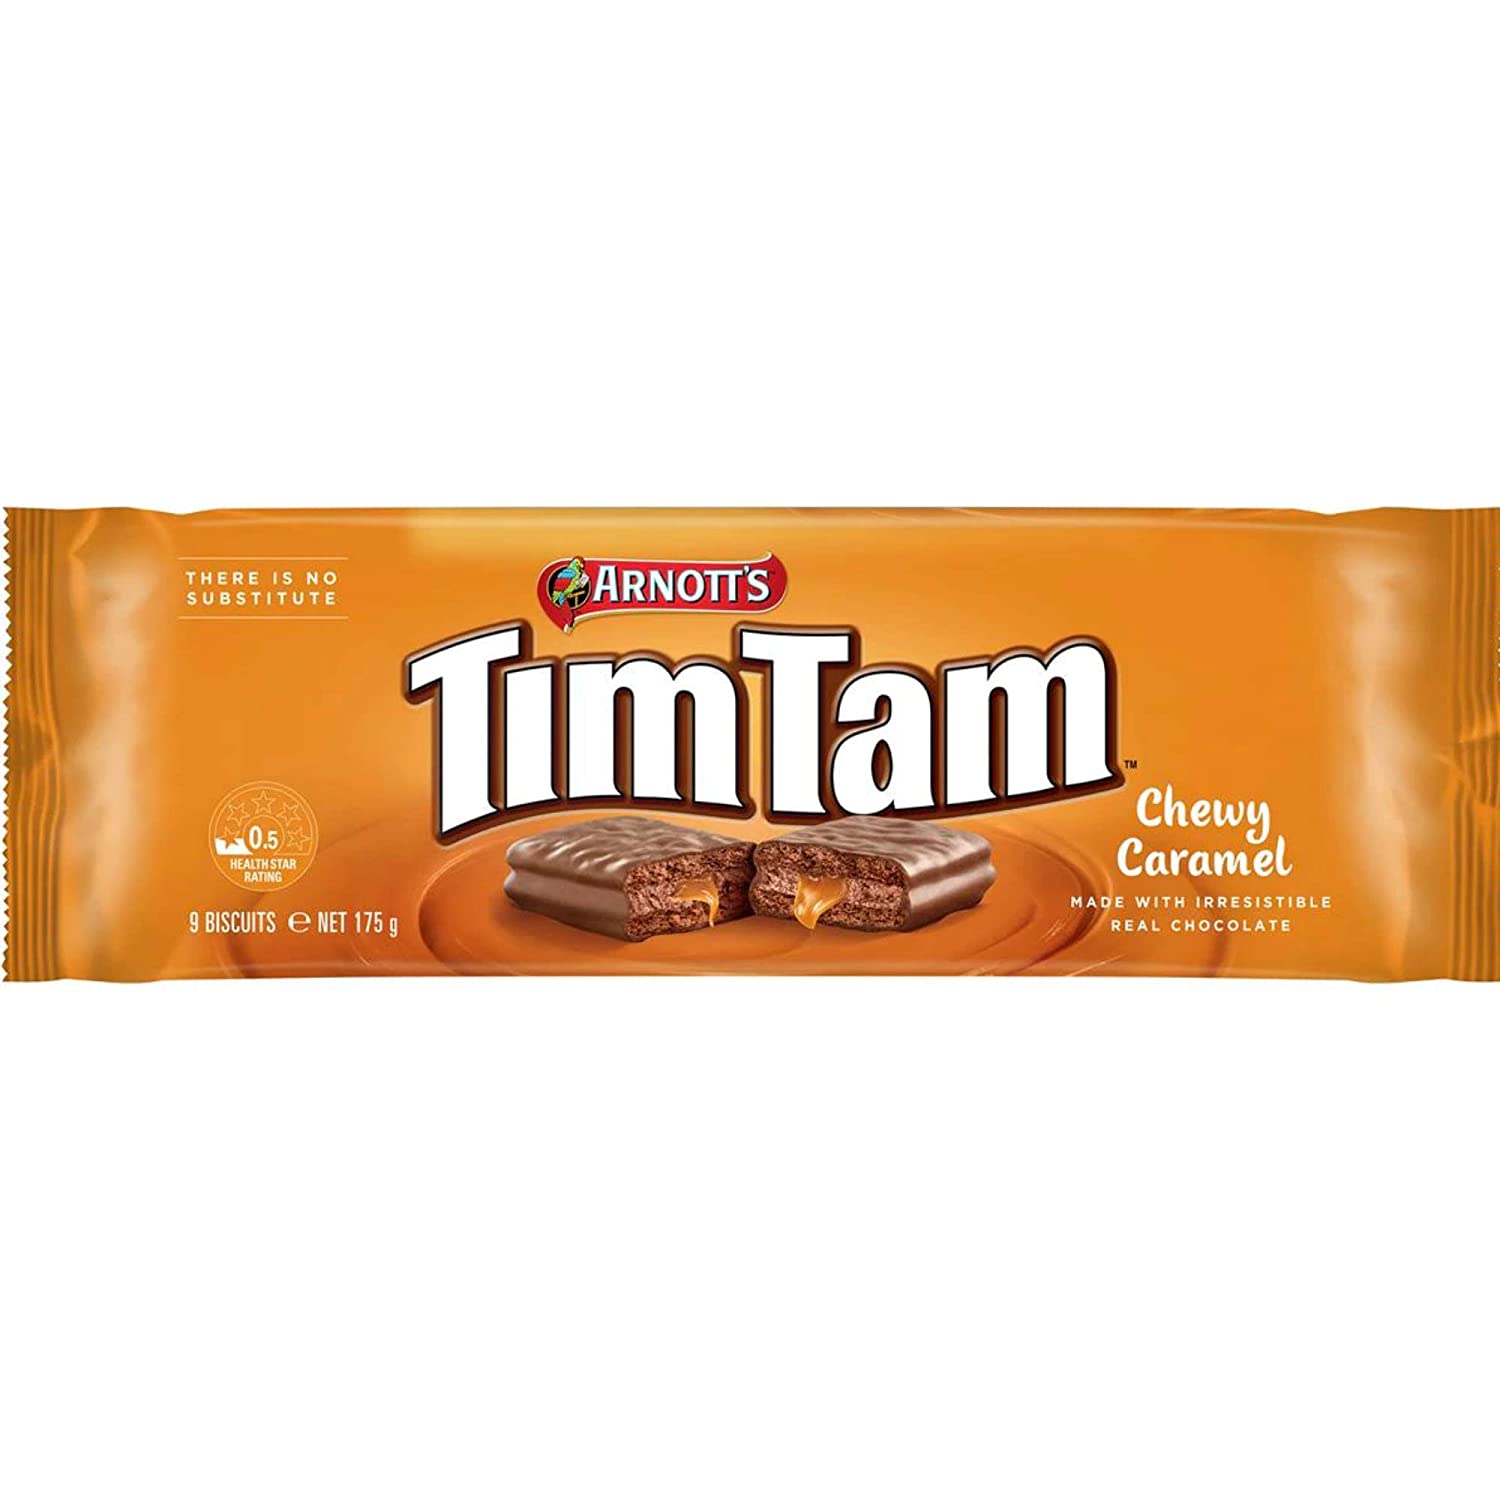 10 packs of Tim Tam Biscuits - Australian Import, Post Free via FEDEX OR DHL